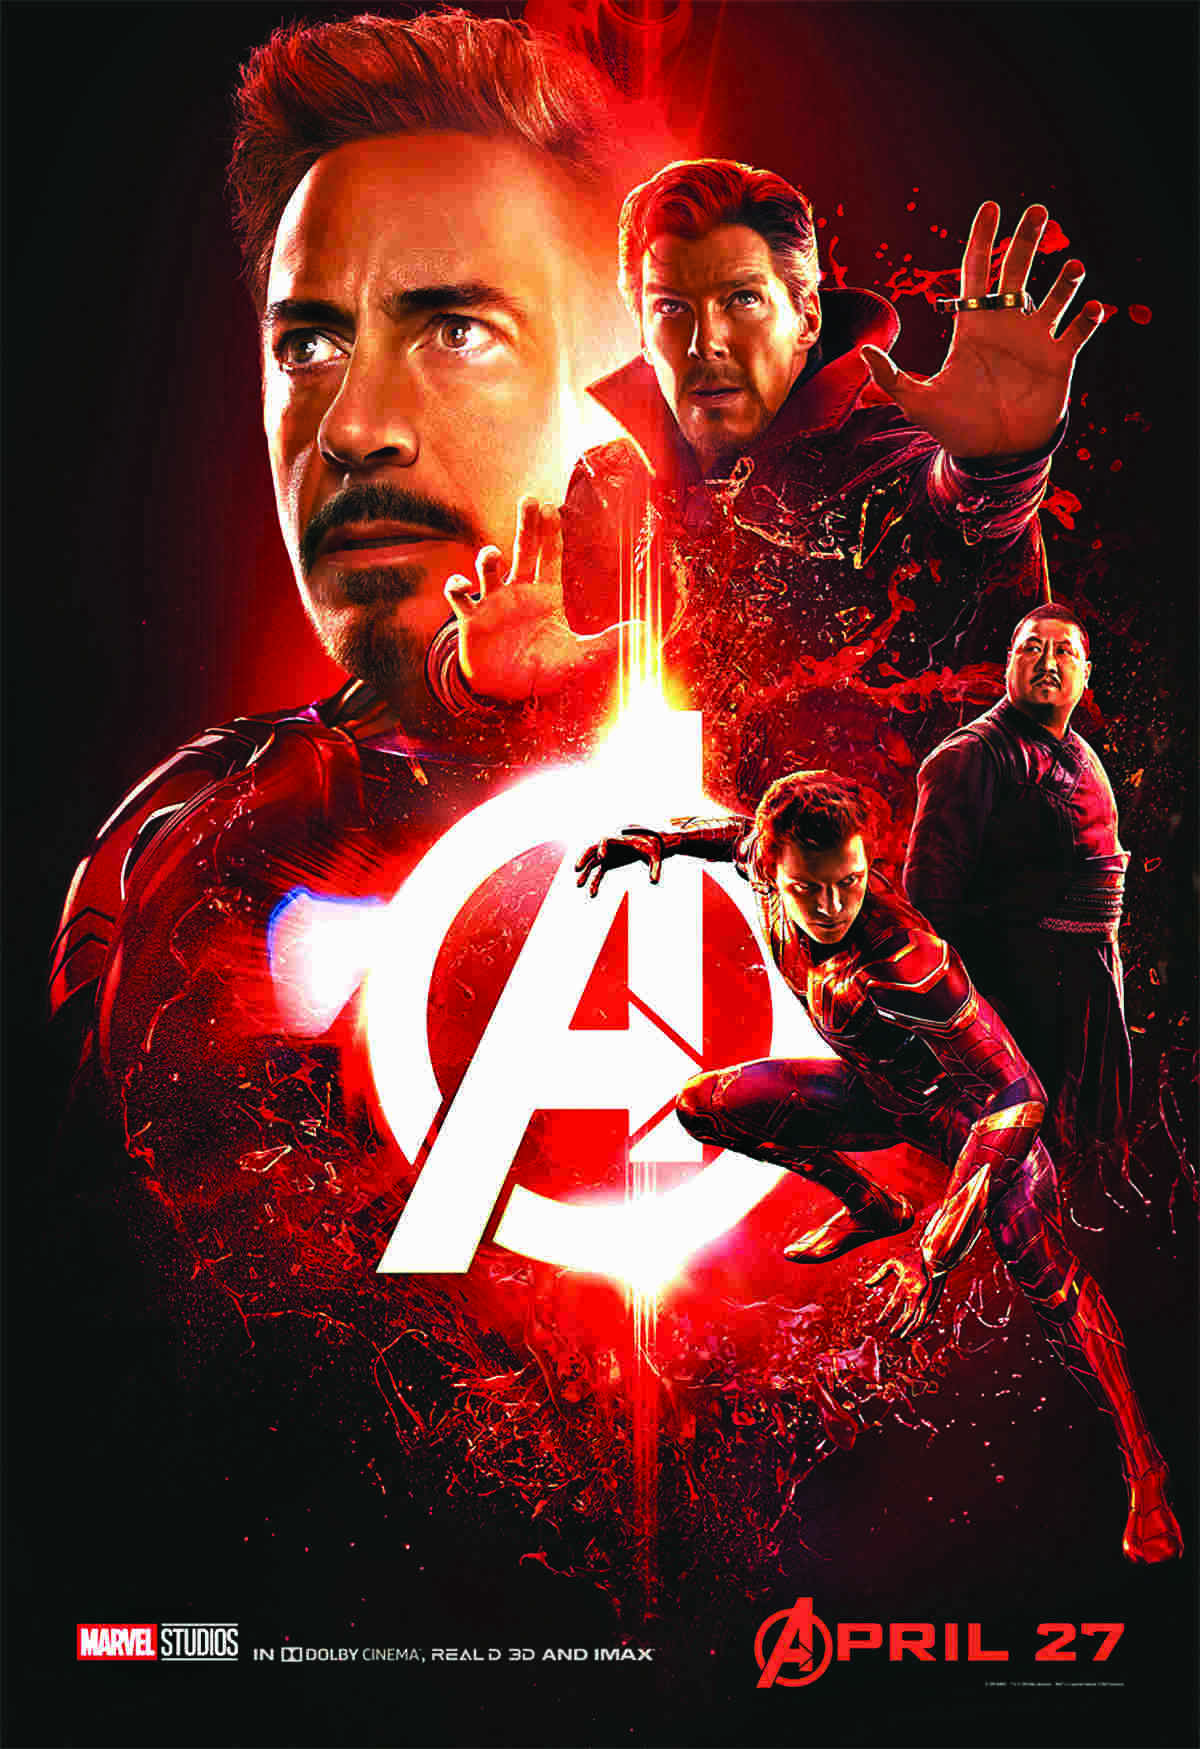 ‘Avengers: Infinity War’ surpasses expectations